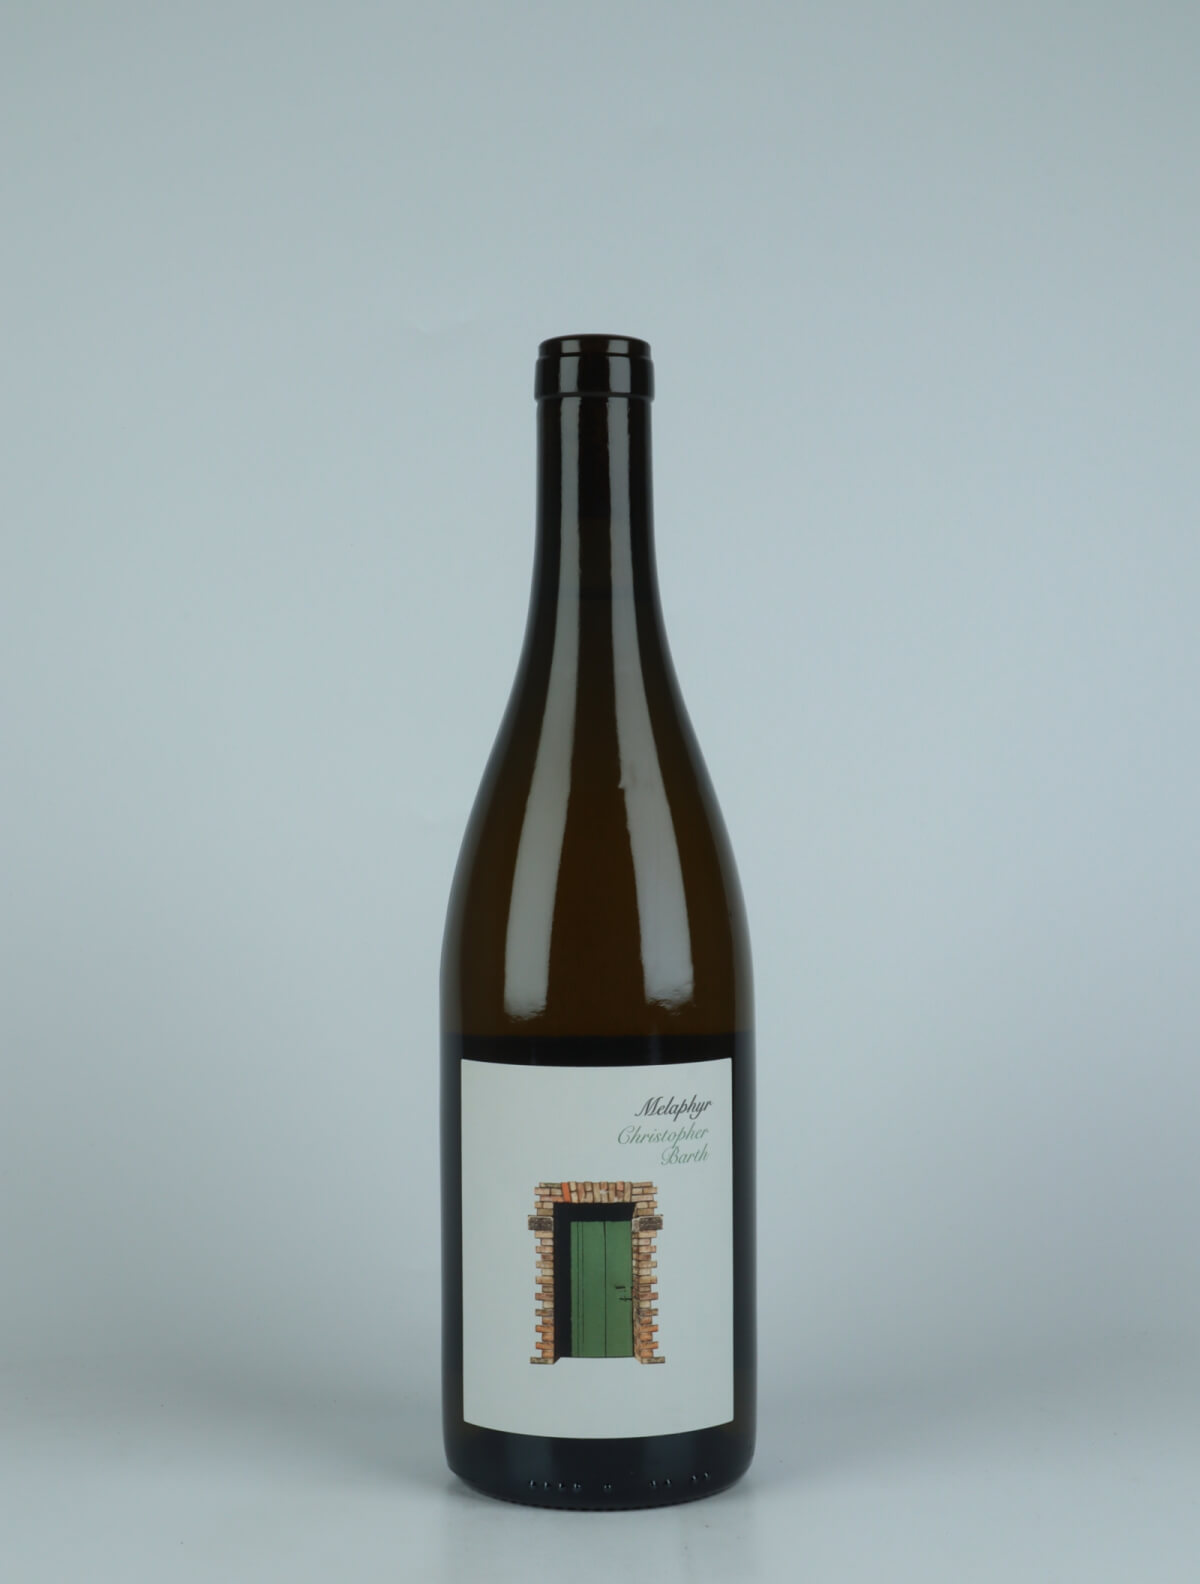 A bottle 2021 Melaphyr Riesling White wine from Christopher Barth, Rheinhessen in Germany